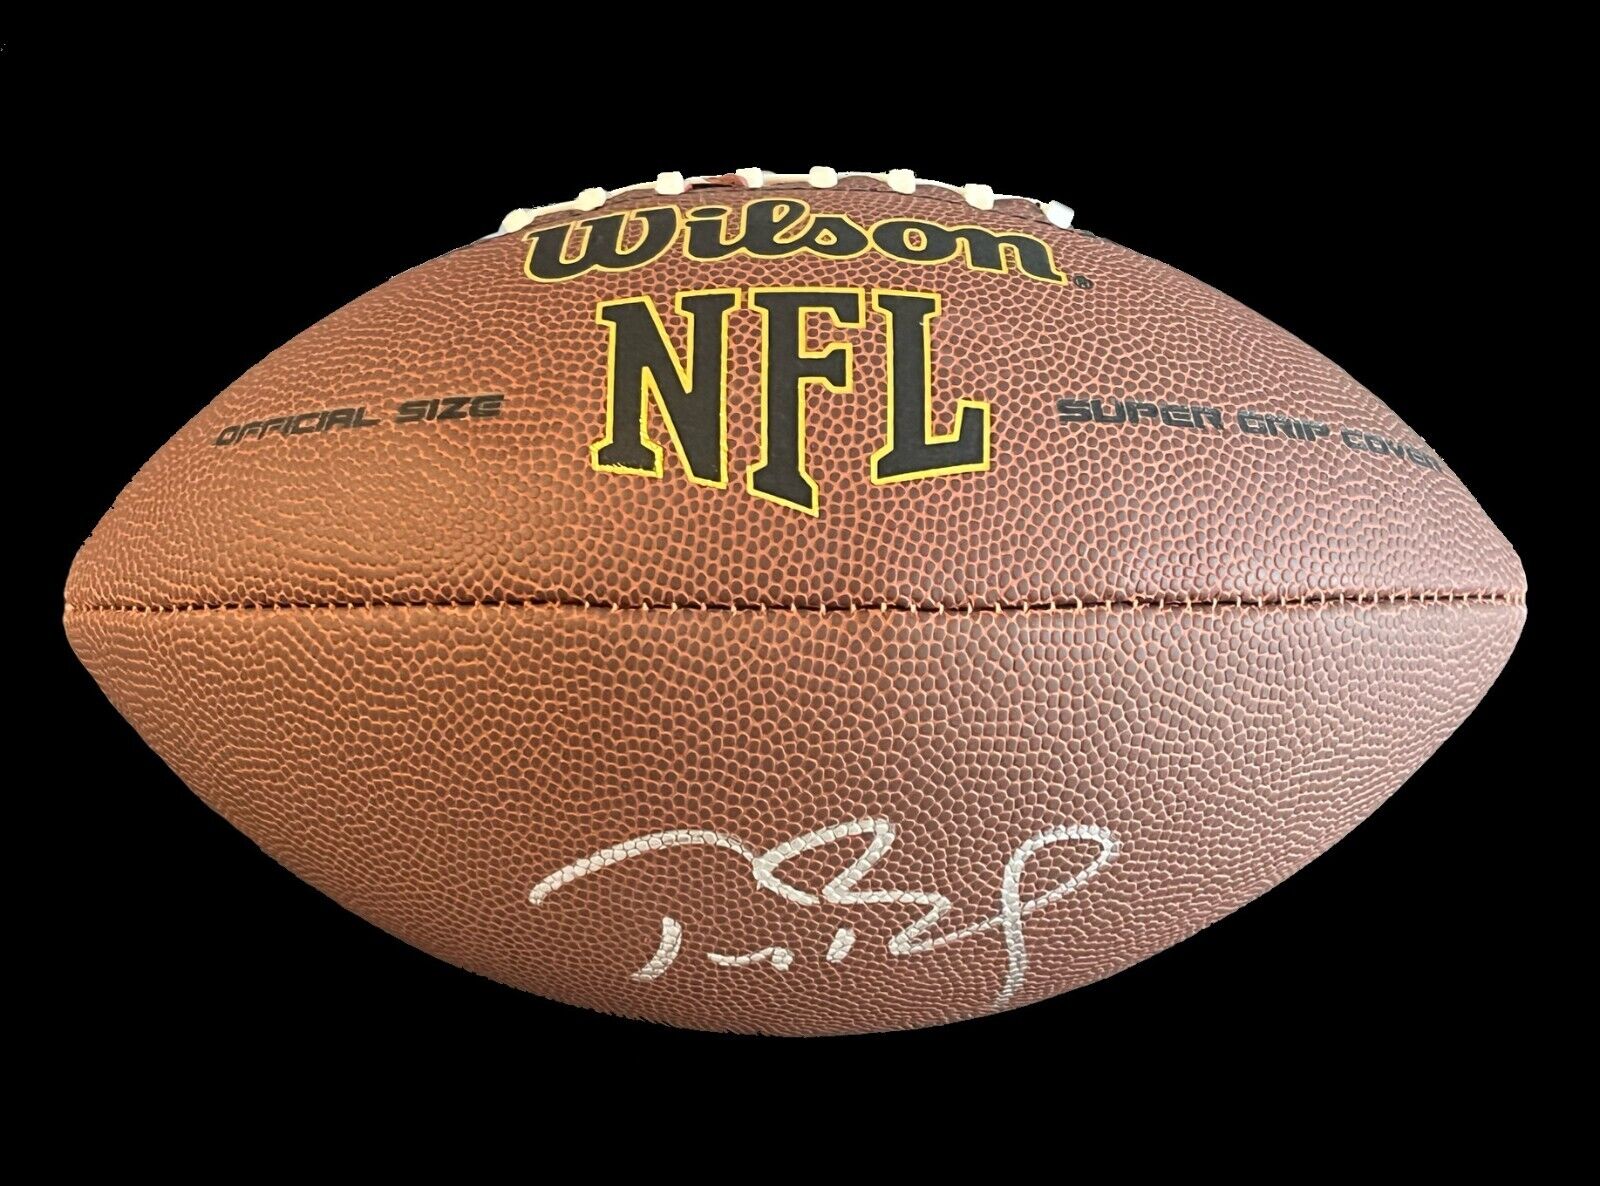 Authenticated Tom Brady Autographed Nfl Football With Coa